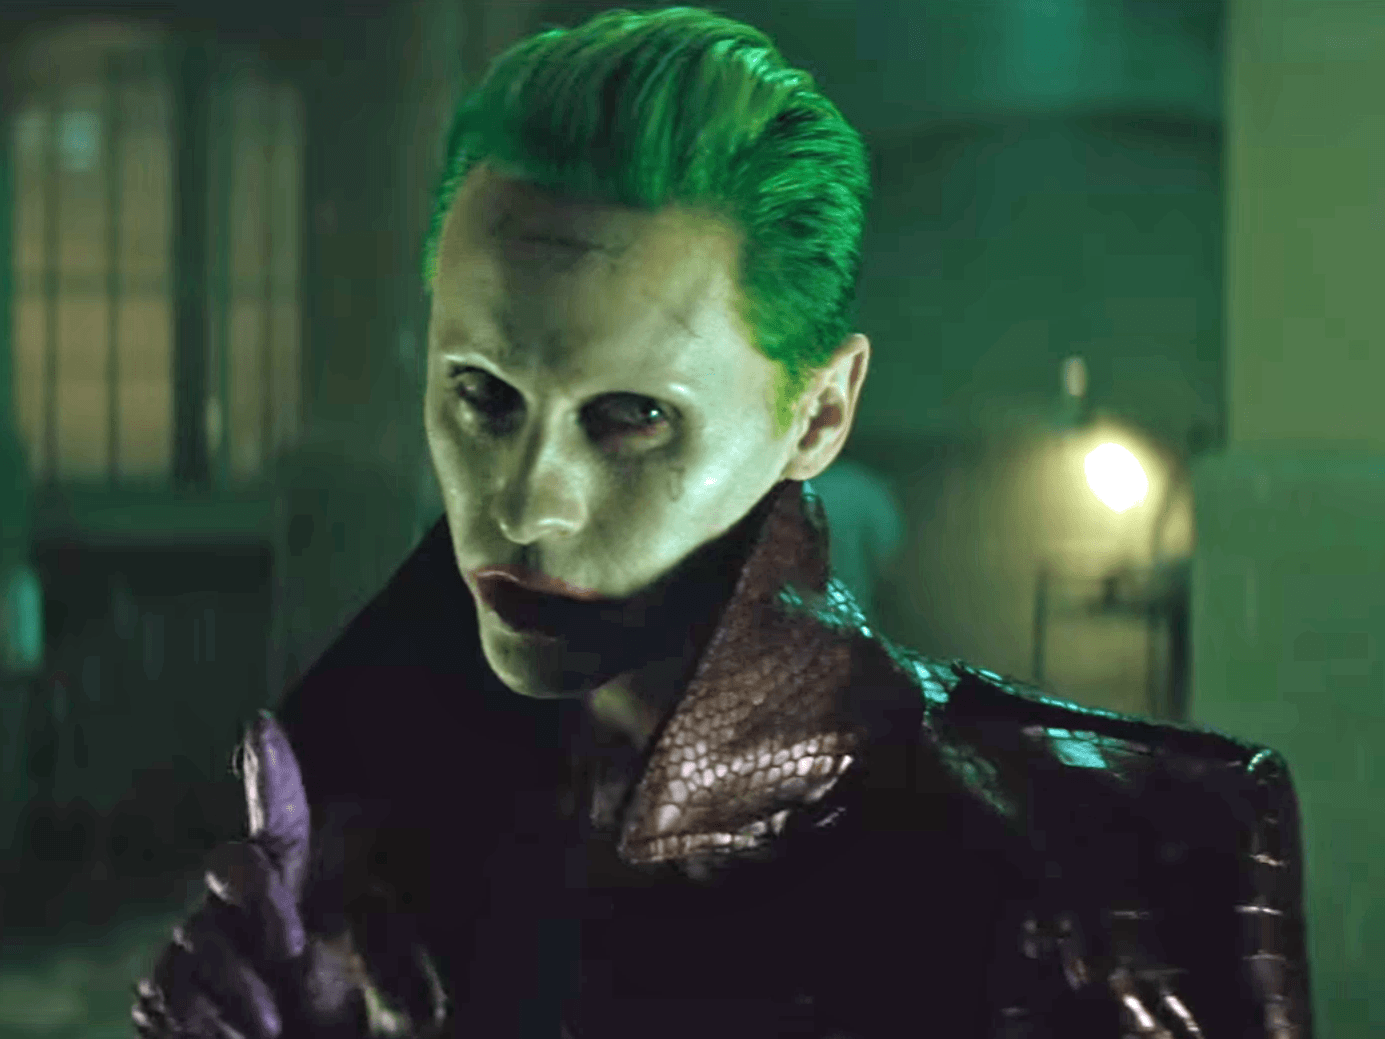 New 'Suicide Squad' trailer shows off Joker